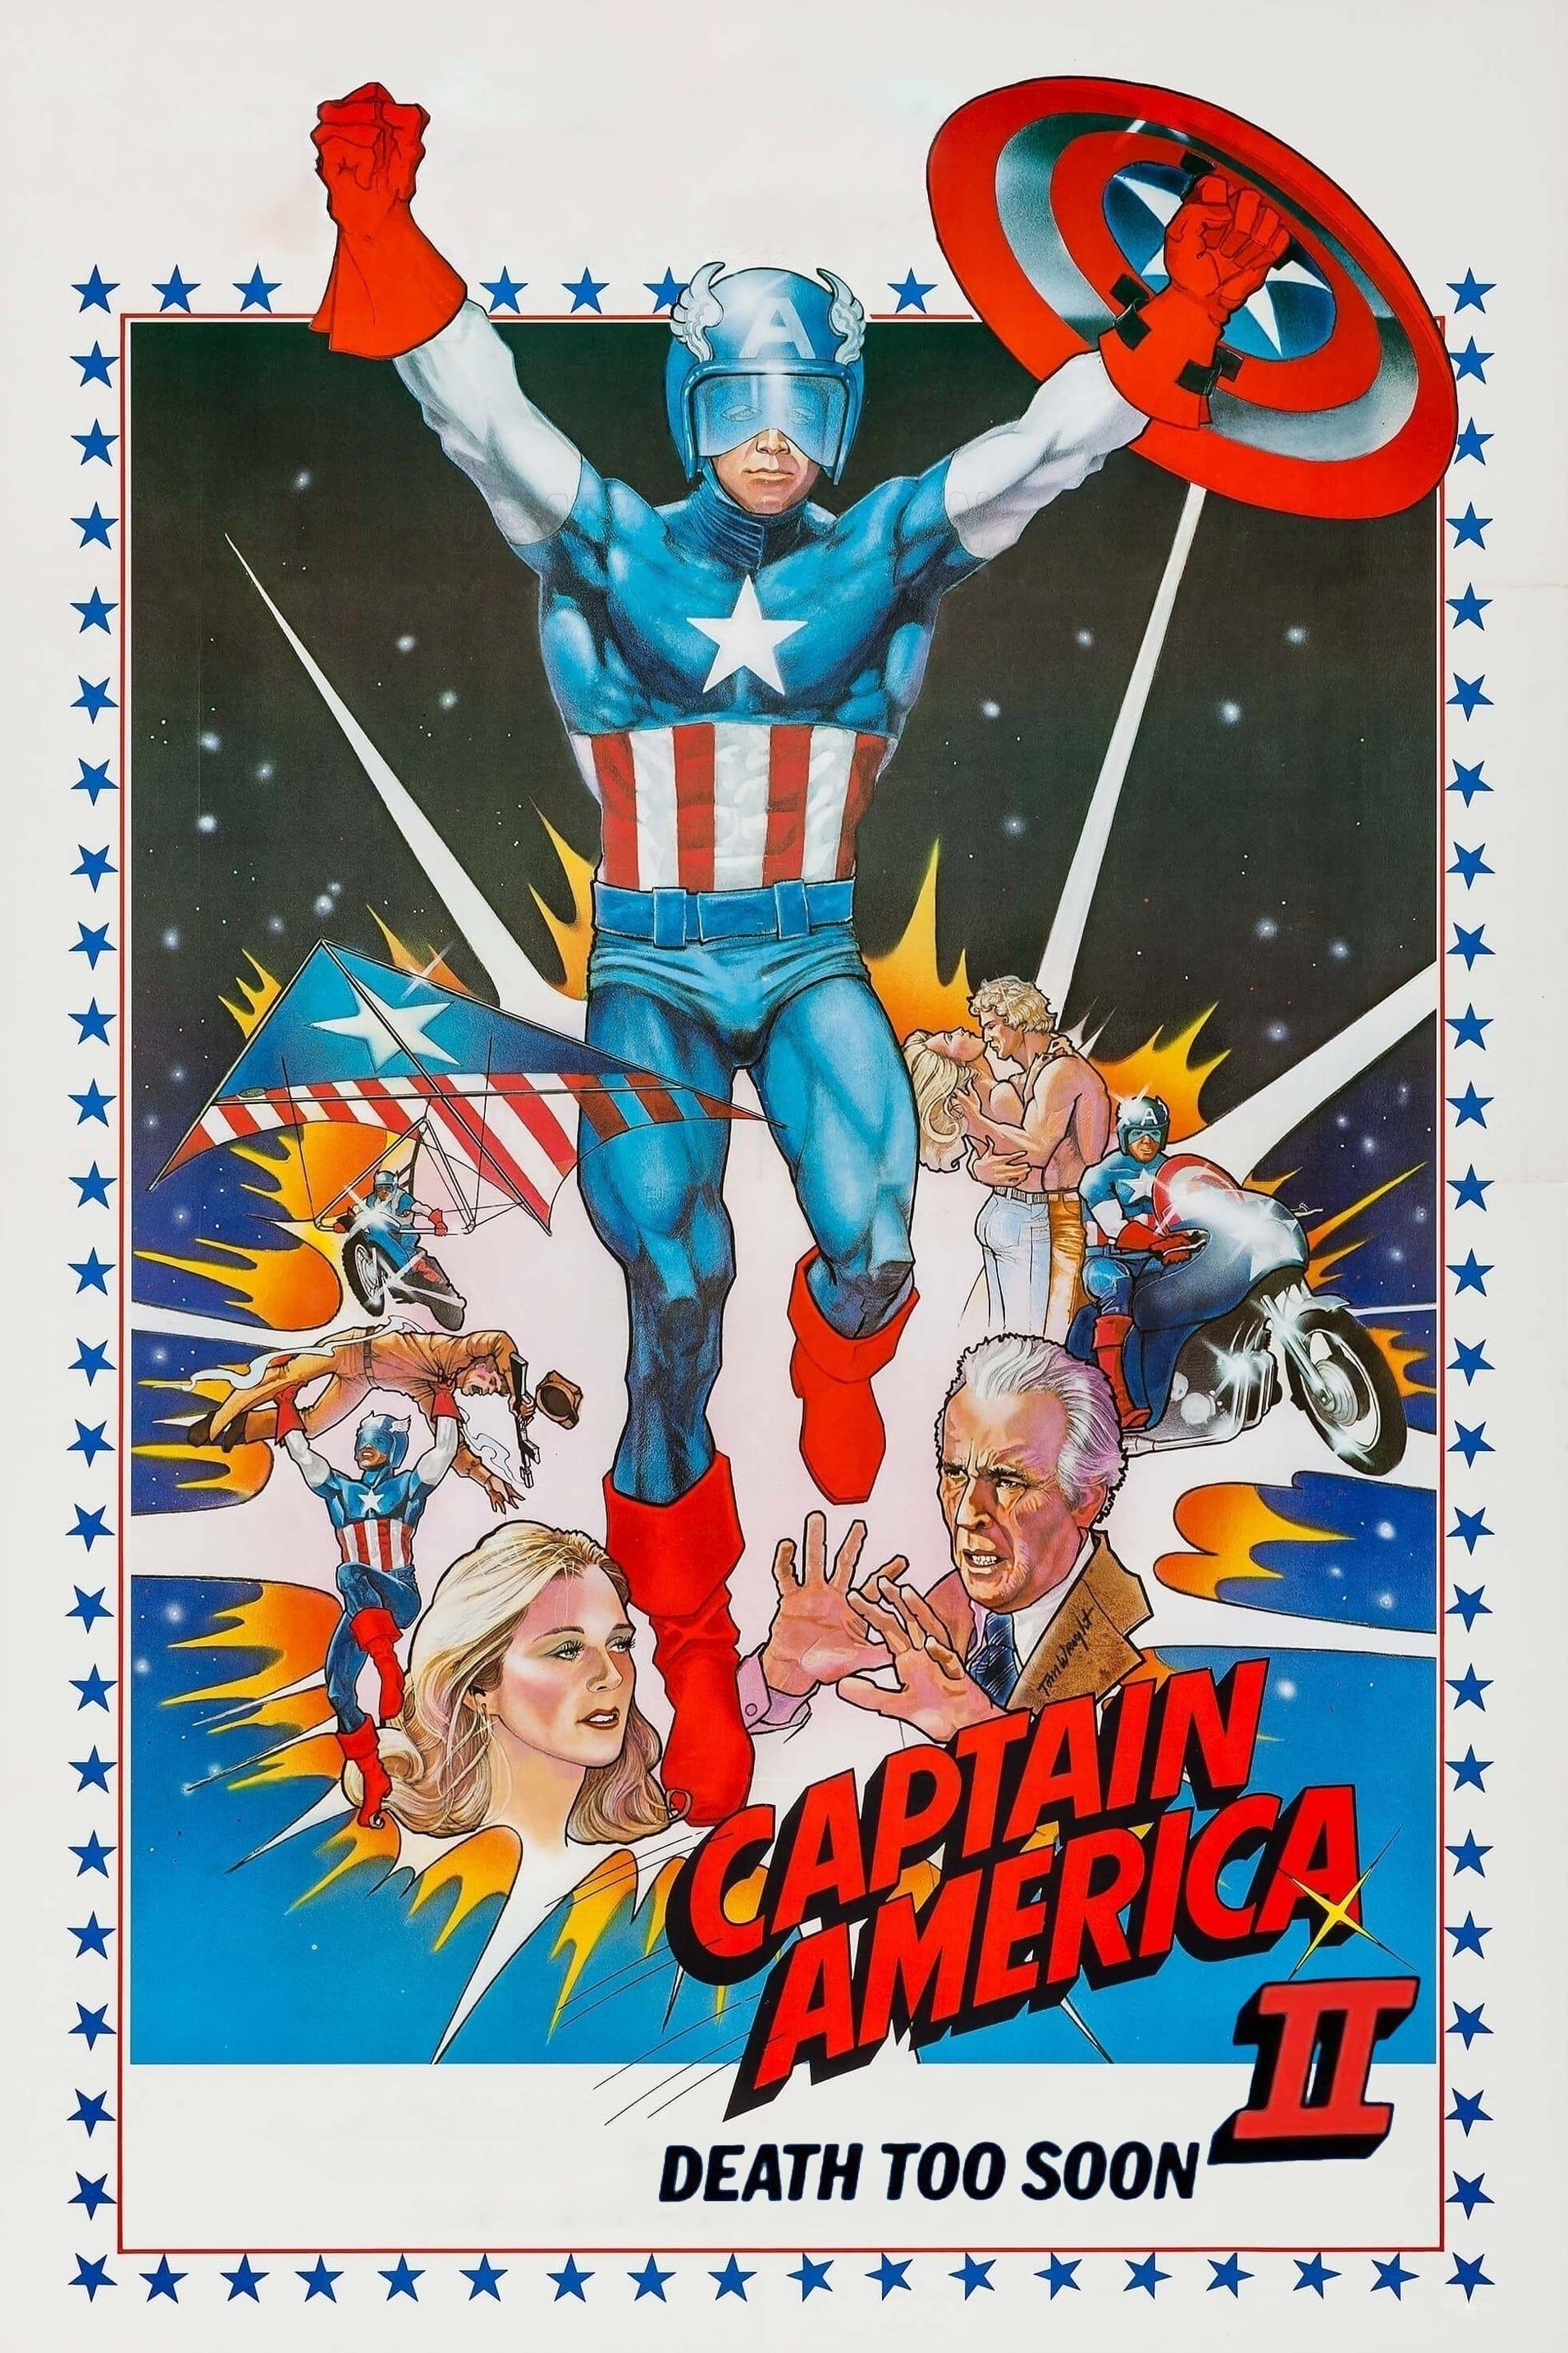 Captain America II: Death Too Soon poster